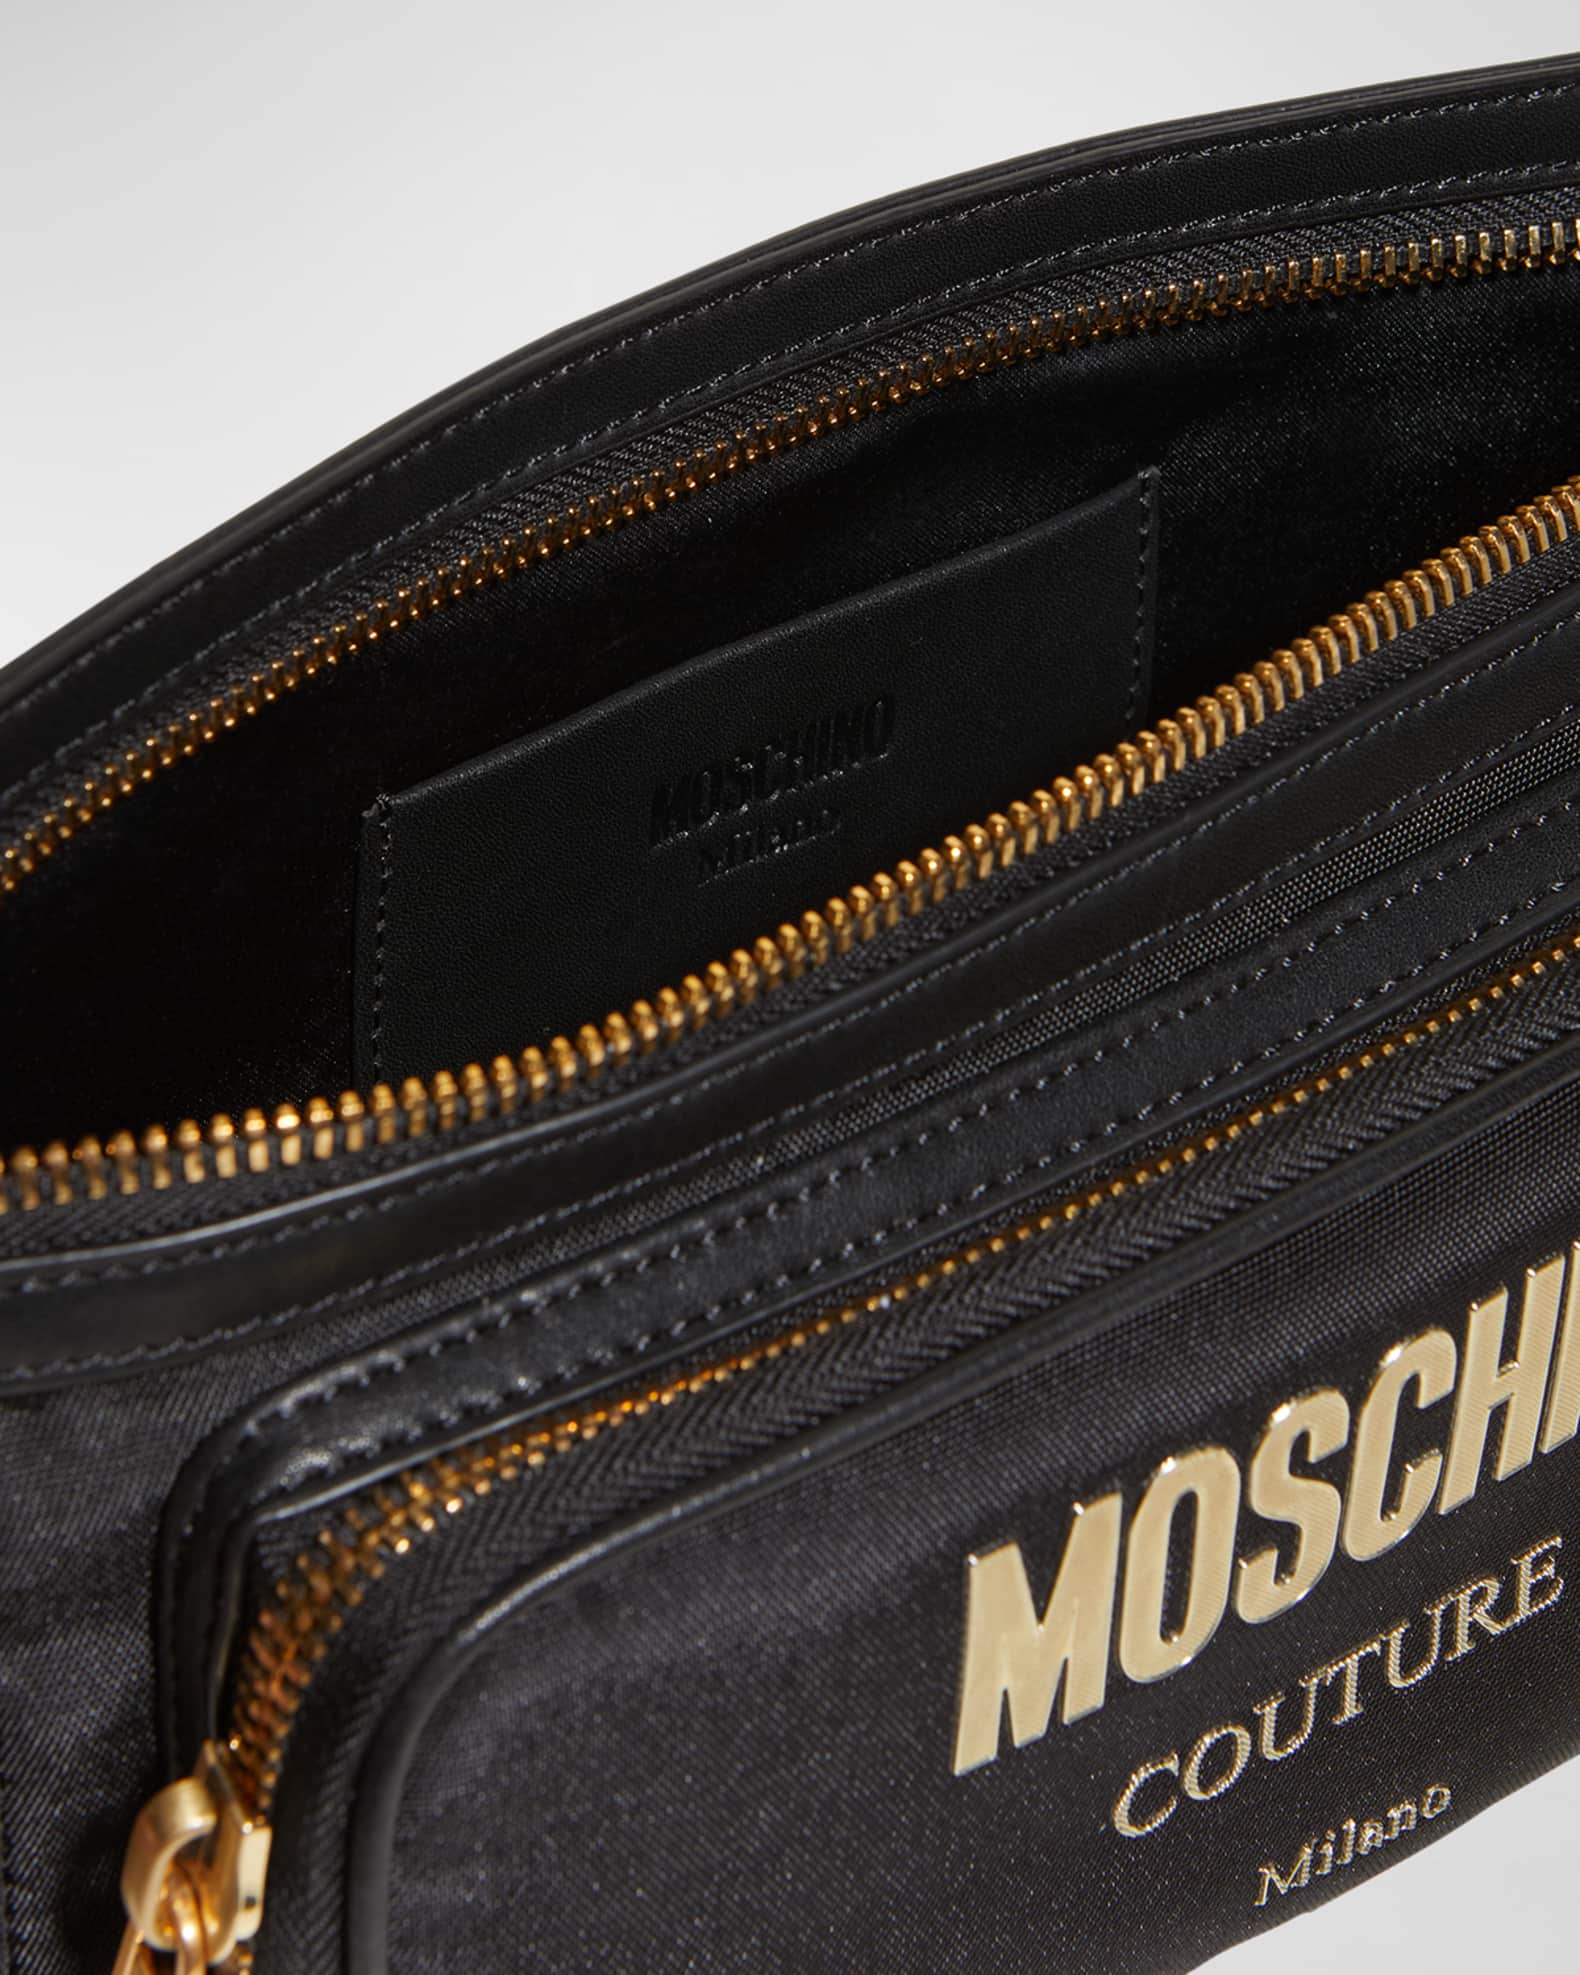 Moschino Men's Logo Belt Bag | Neiman Marcus